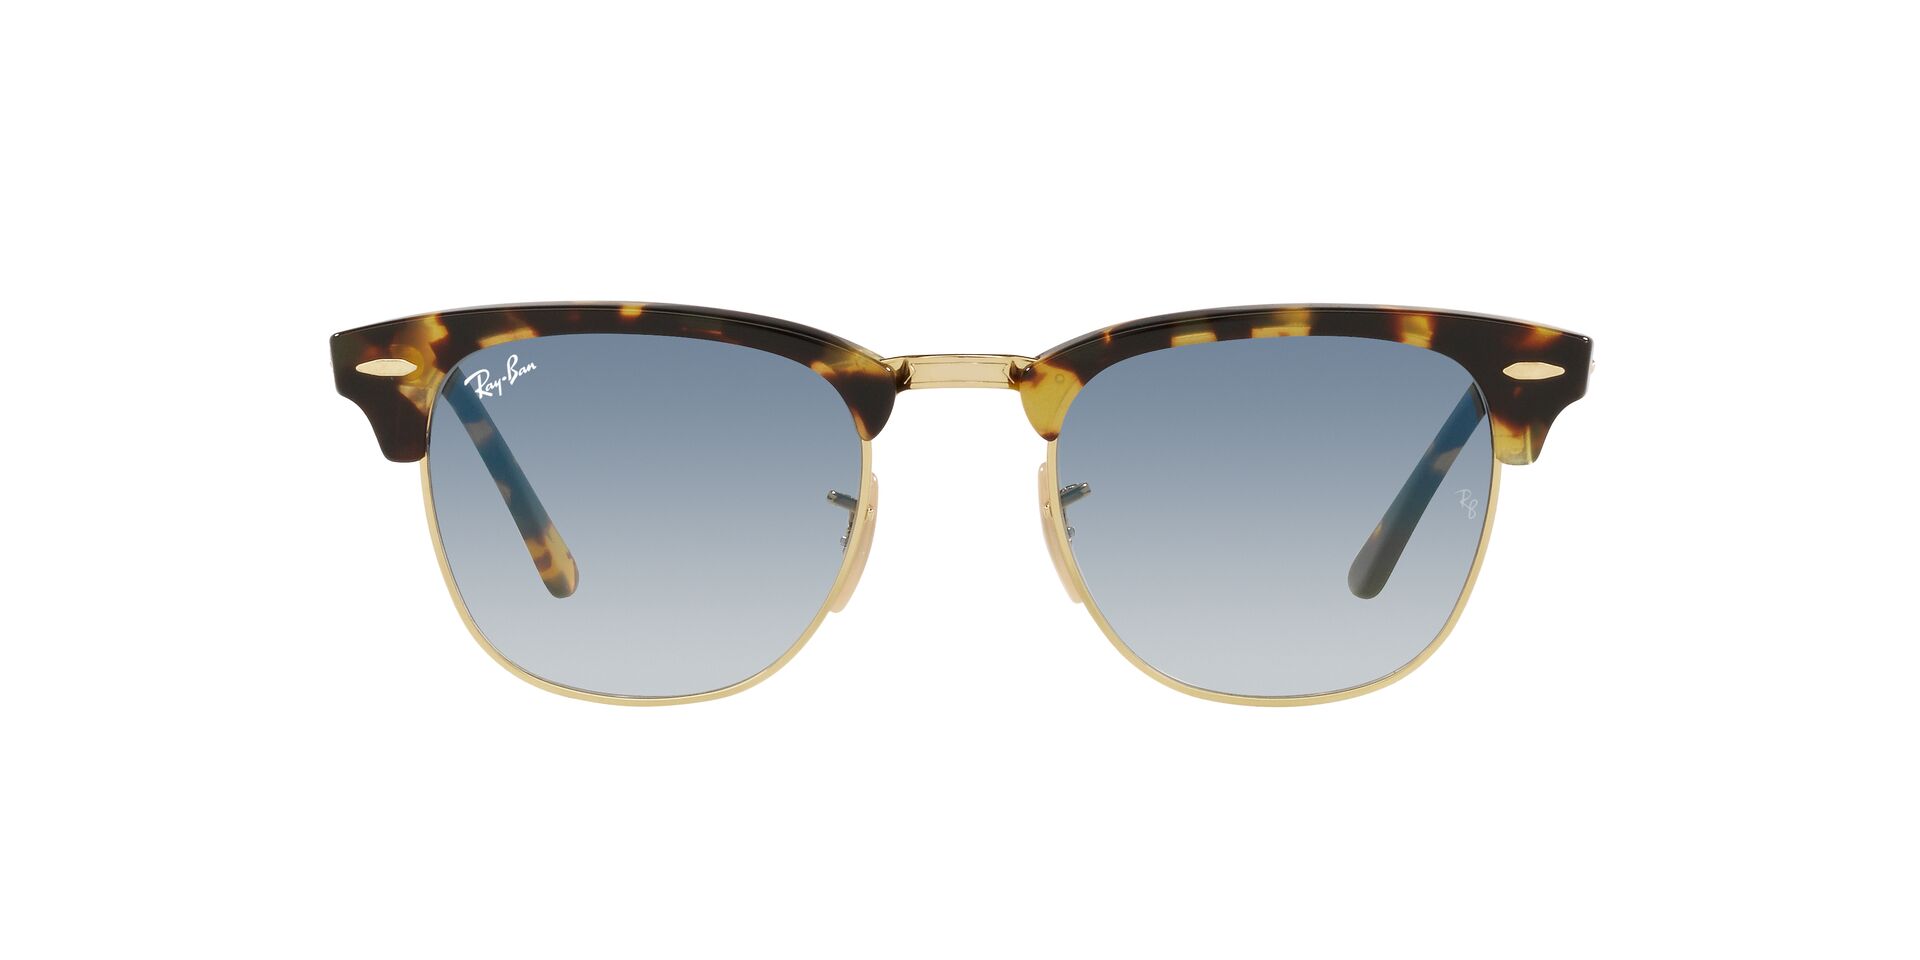 Ray-Ban Unisex Clubmaster Sunglasses, Spotted Brown Havana, 51 mm UK :  Rayban: Amazon.co.uk: Fashion